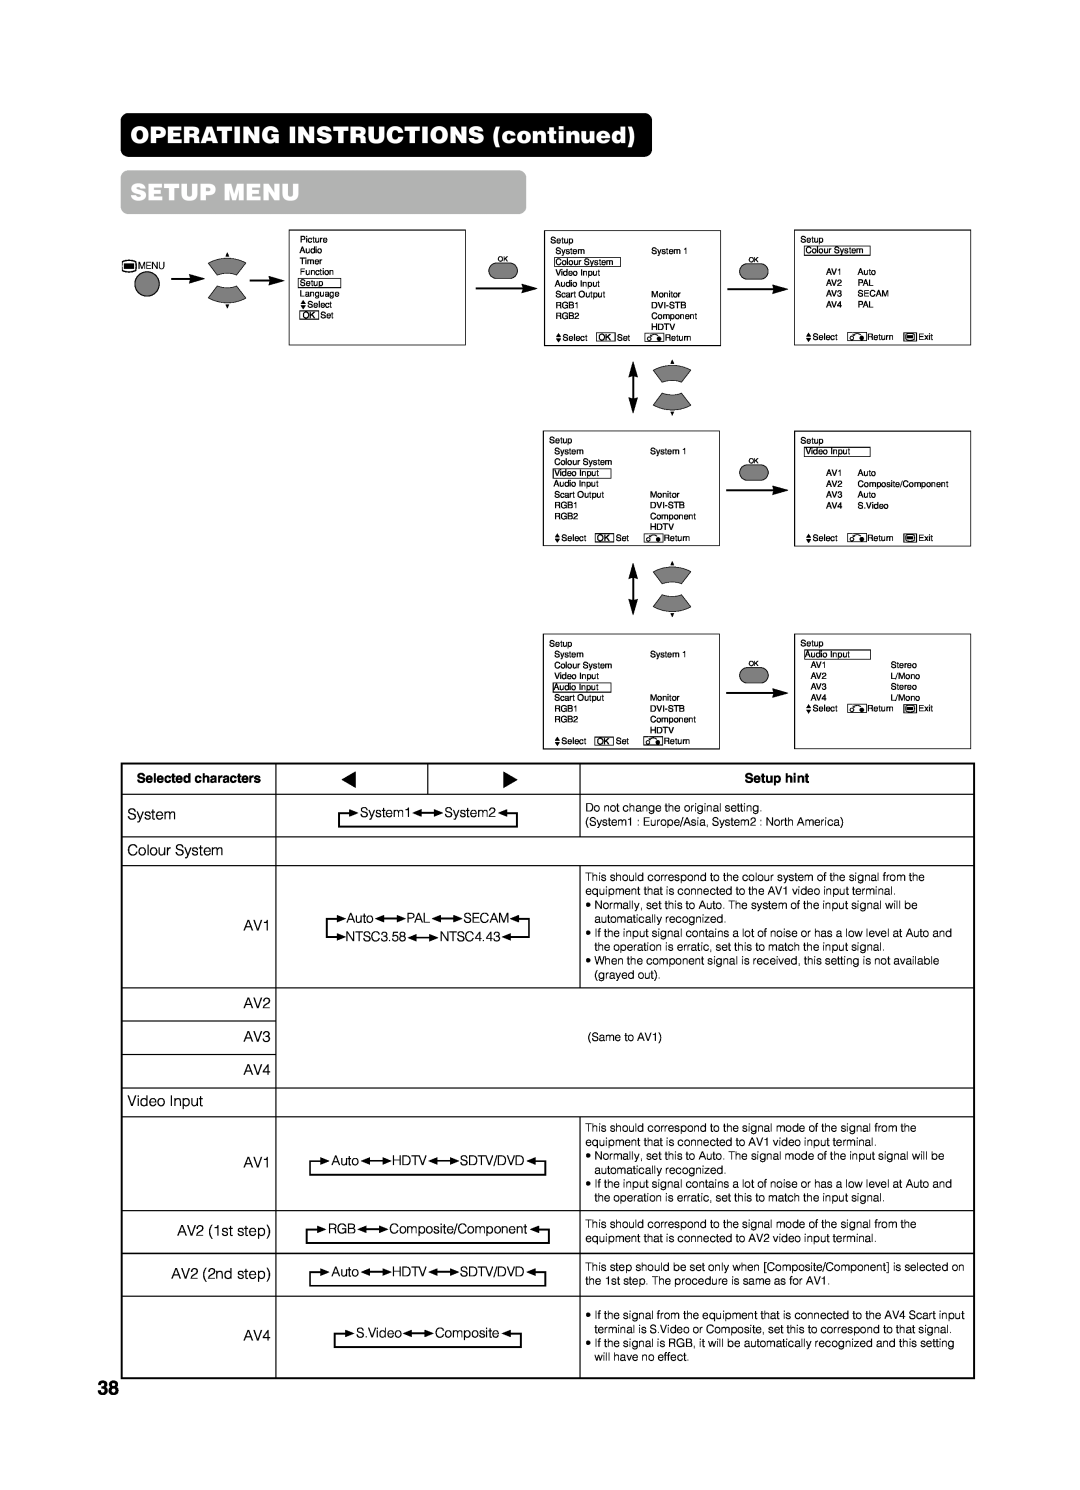 Yamaha PDM-4210E user manual OPERATING INSTRUCTIONS continued SETUP MENU, AV2 2nd step AV4 